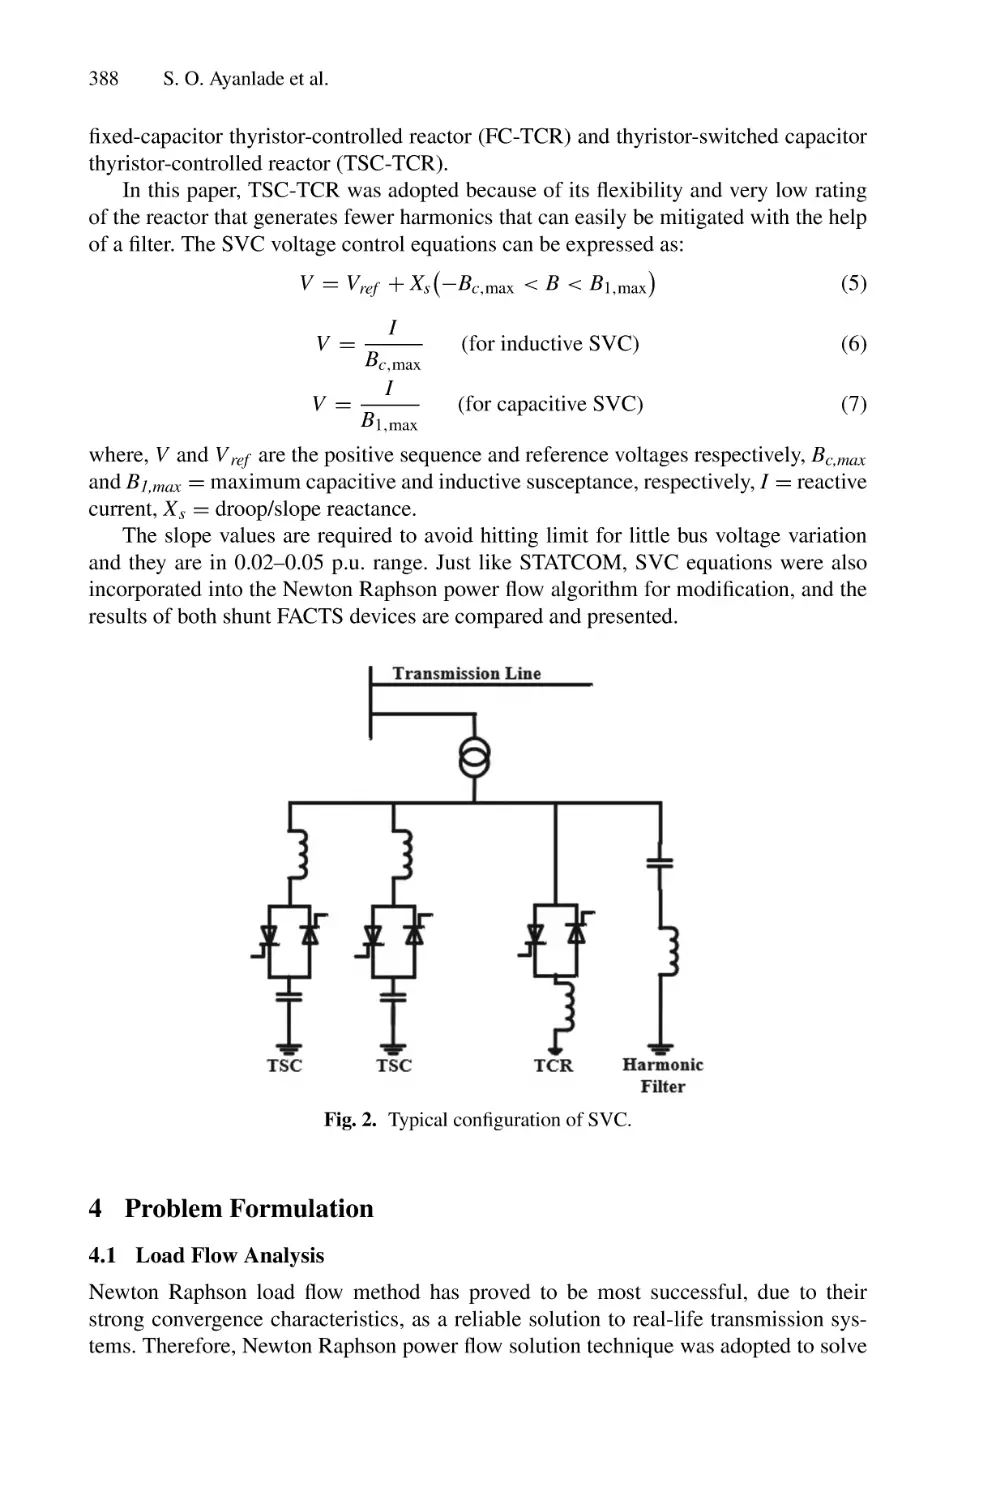 4 Problem Formulation
4.1 Load Flow Analysis